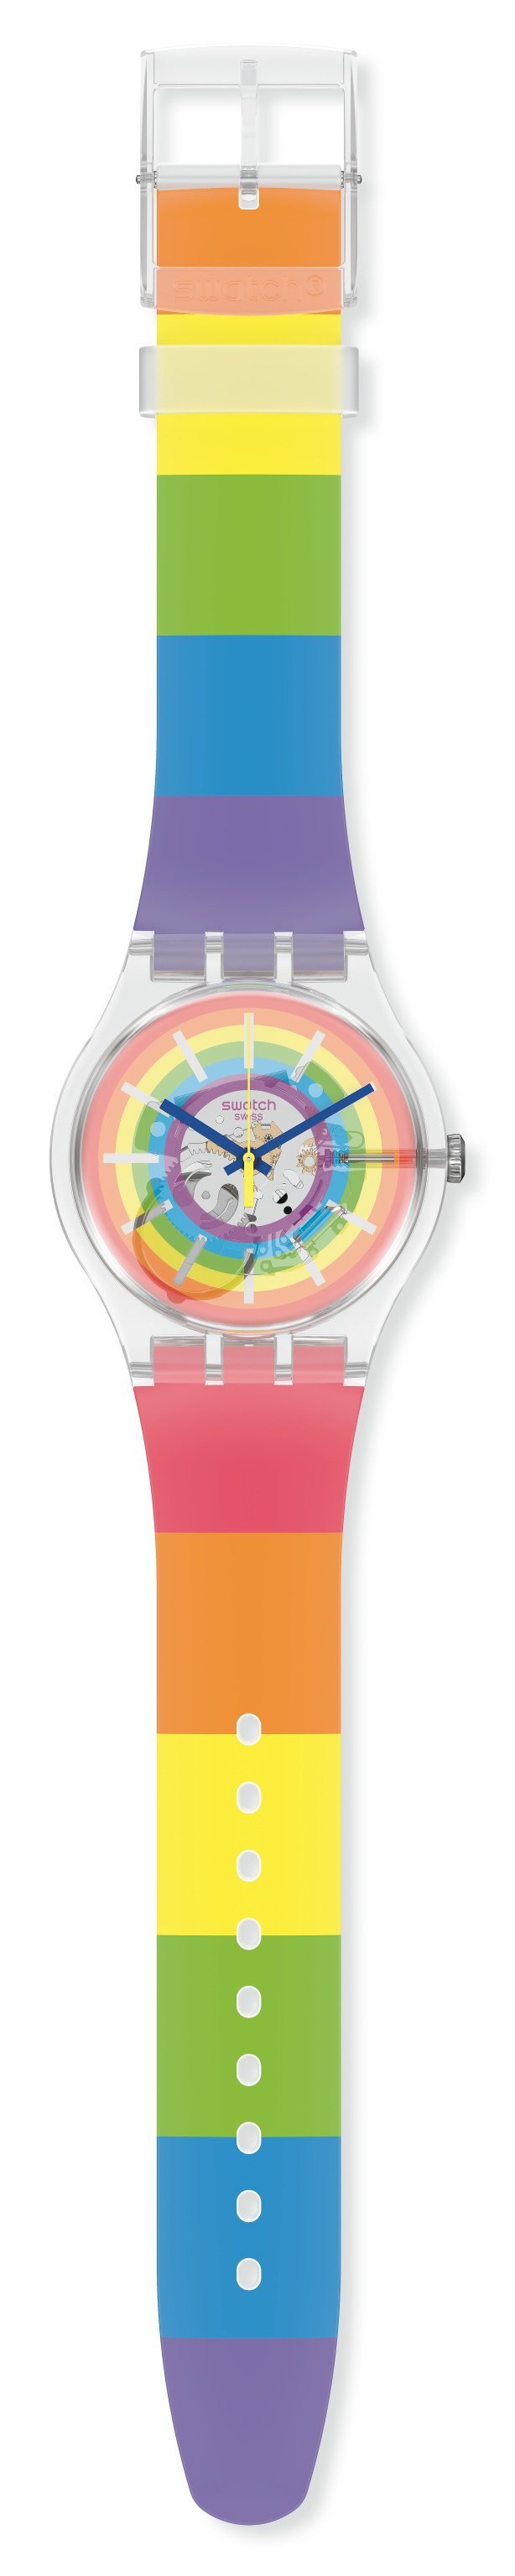 SWATCH OPENSUMMER彩虹腕表，表帶的顏色也依序排列貫徹平權精神。